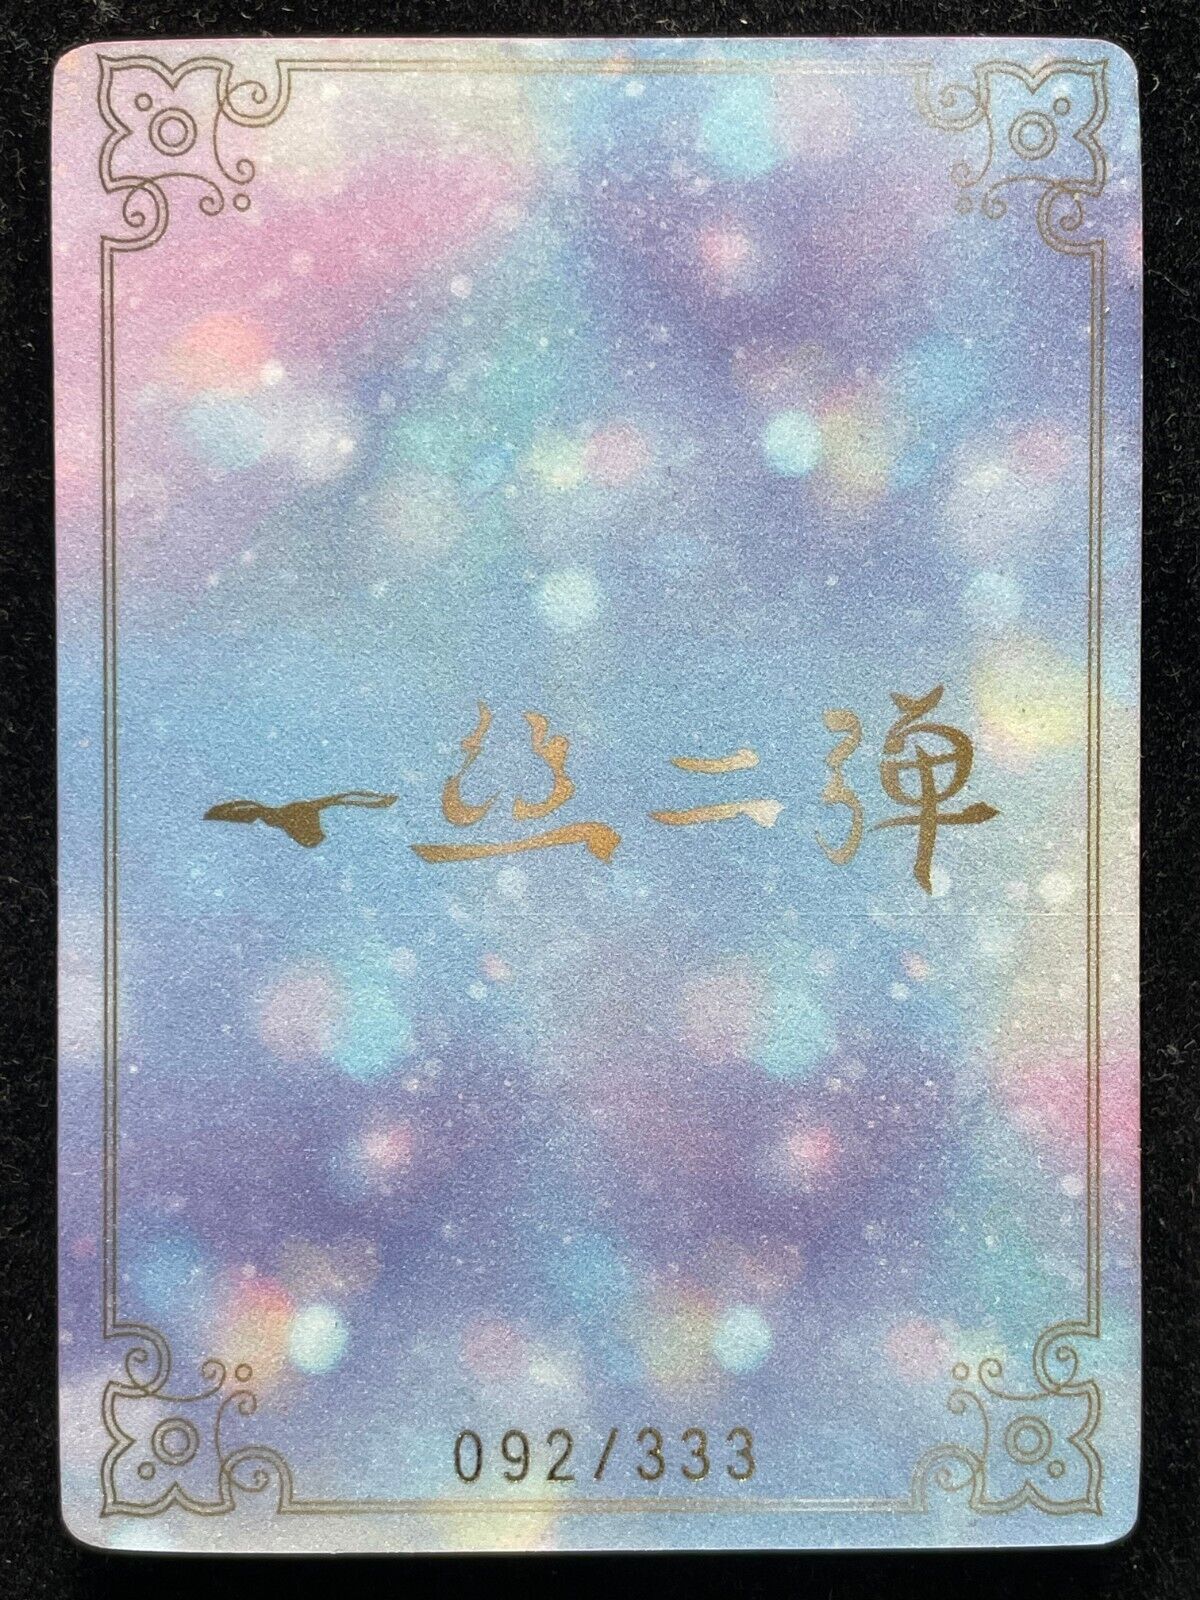 🔥 (92/333) Yelan Genshin Meika 1 shot 2 Goddess Story Anime Waifu Card SK-15 